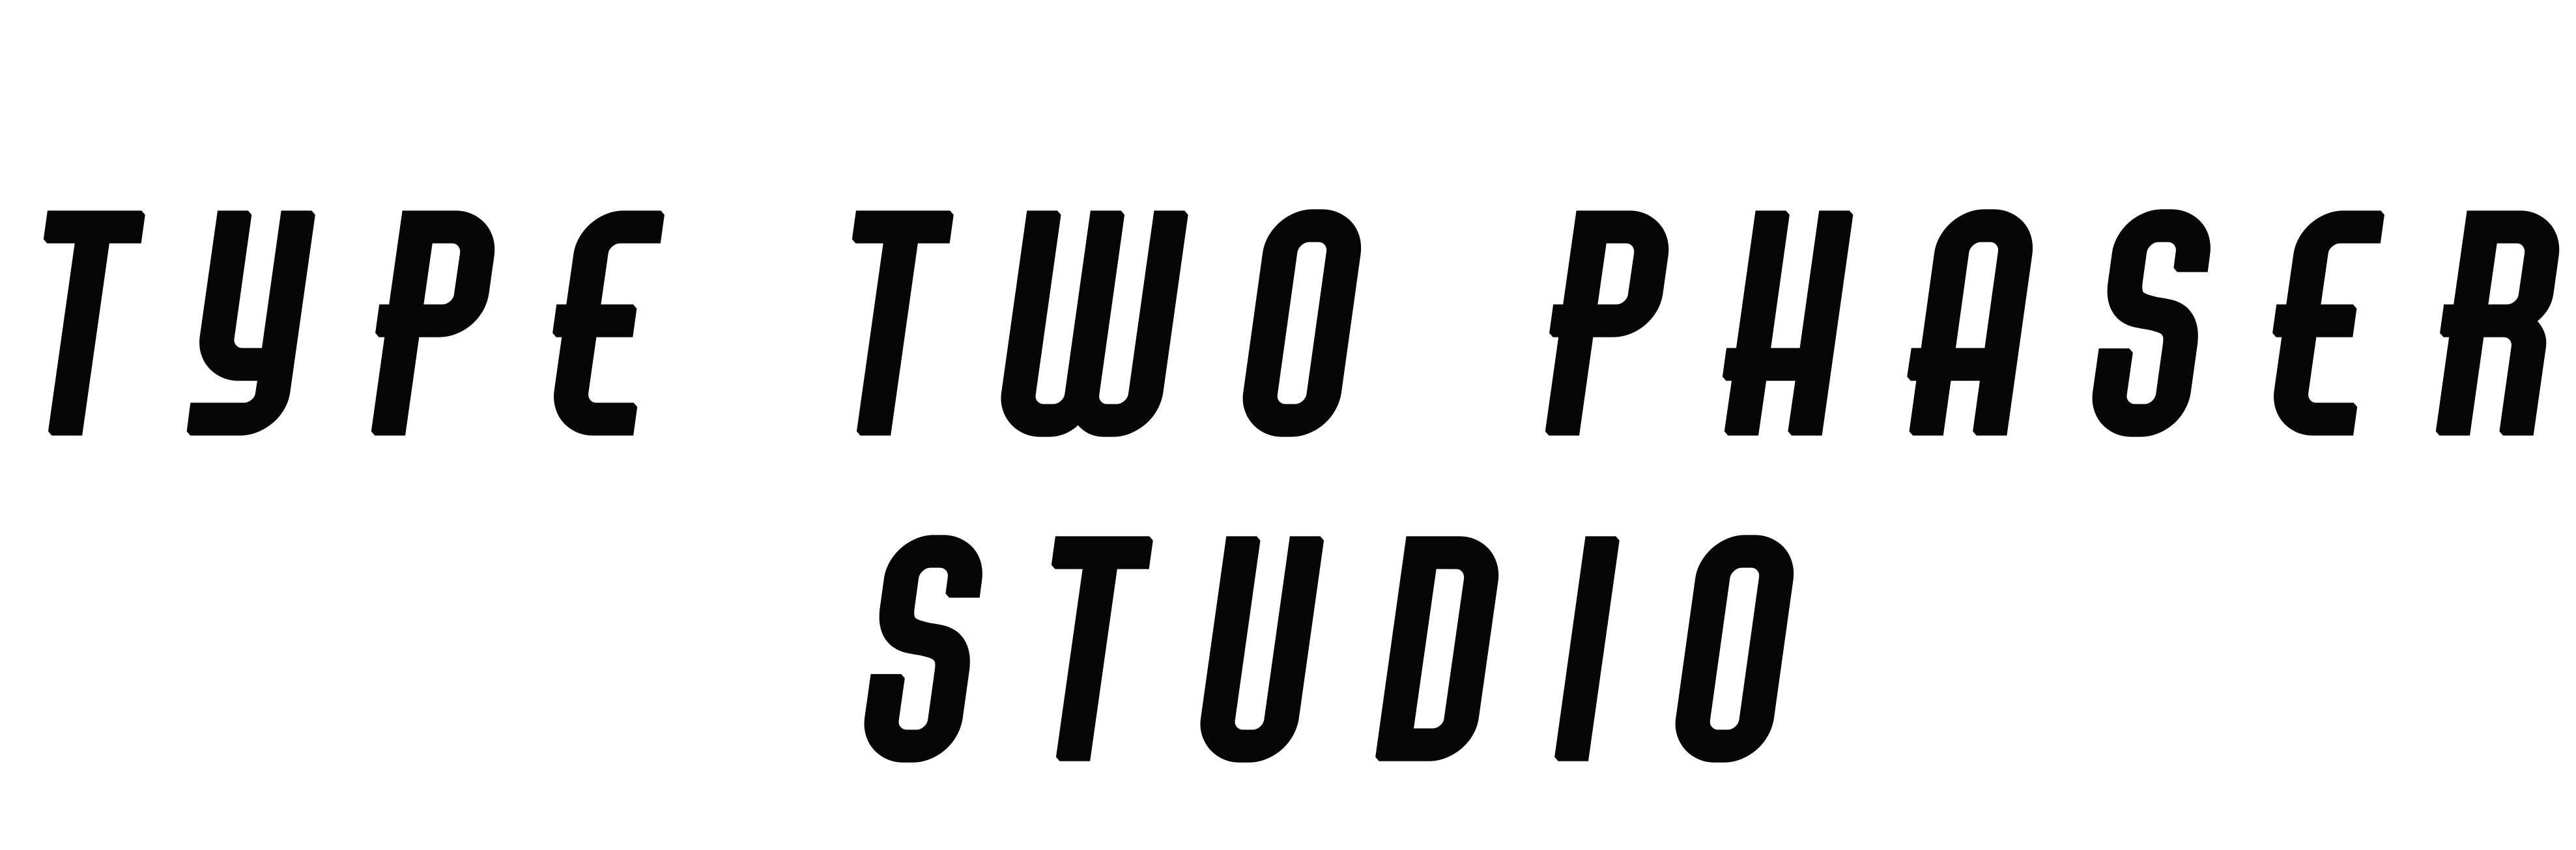 Type Two Phaser Studio